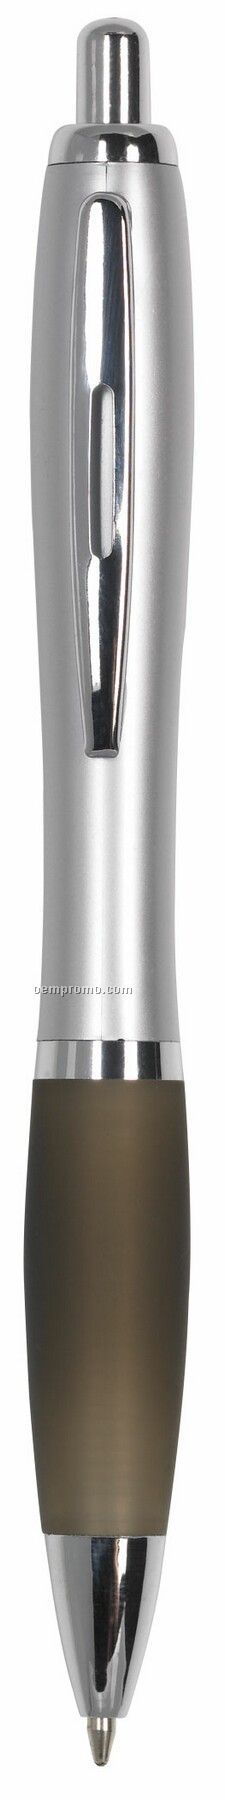 Luna Matte Silver Barrel Ballpoint Pen W/ Colored Gripper